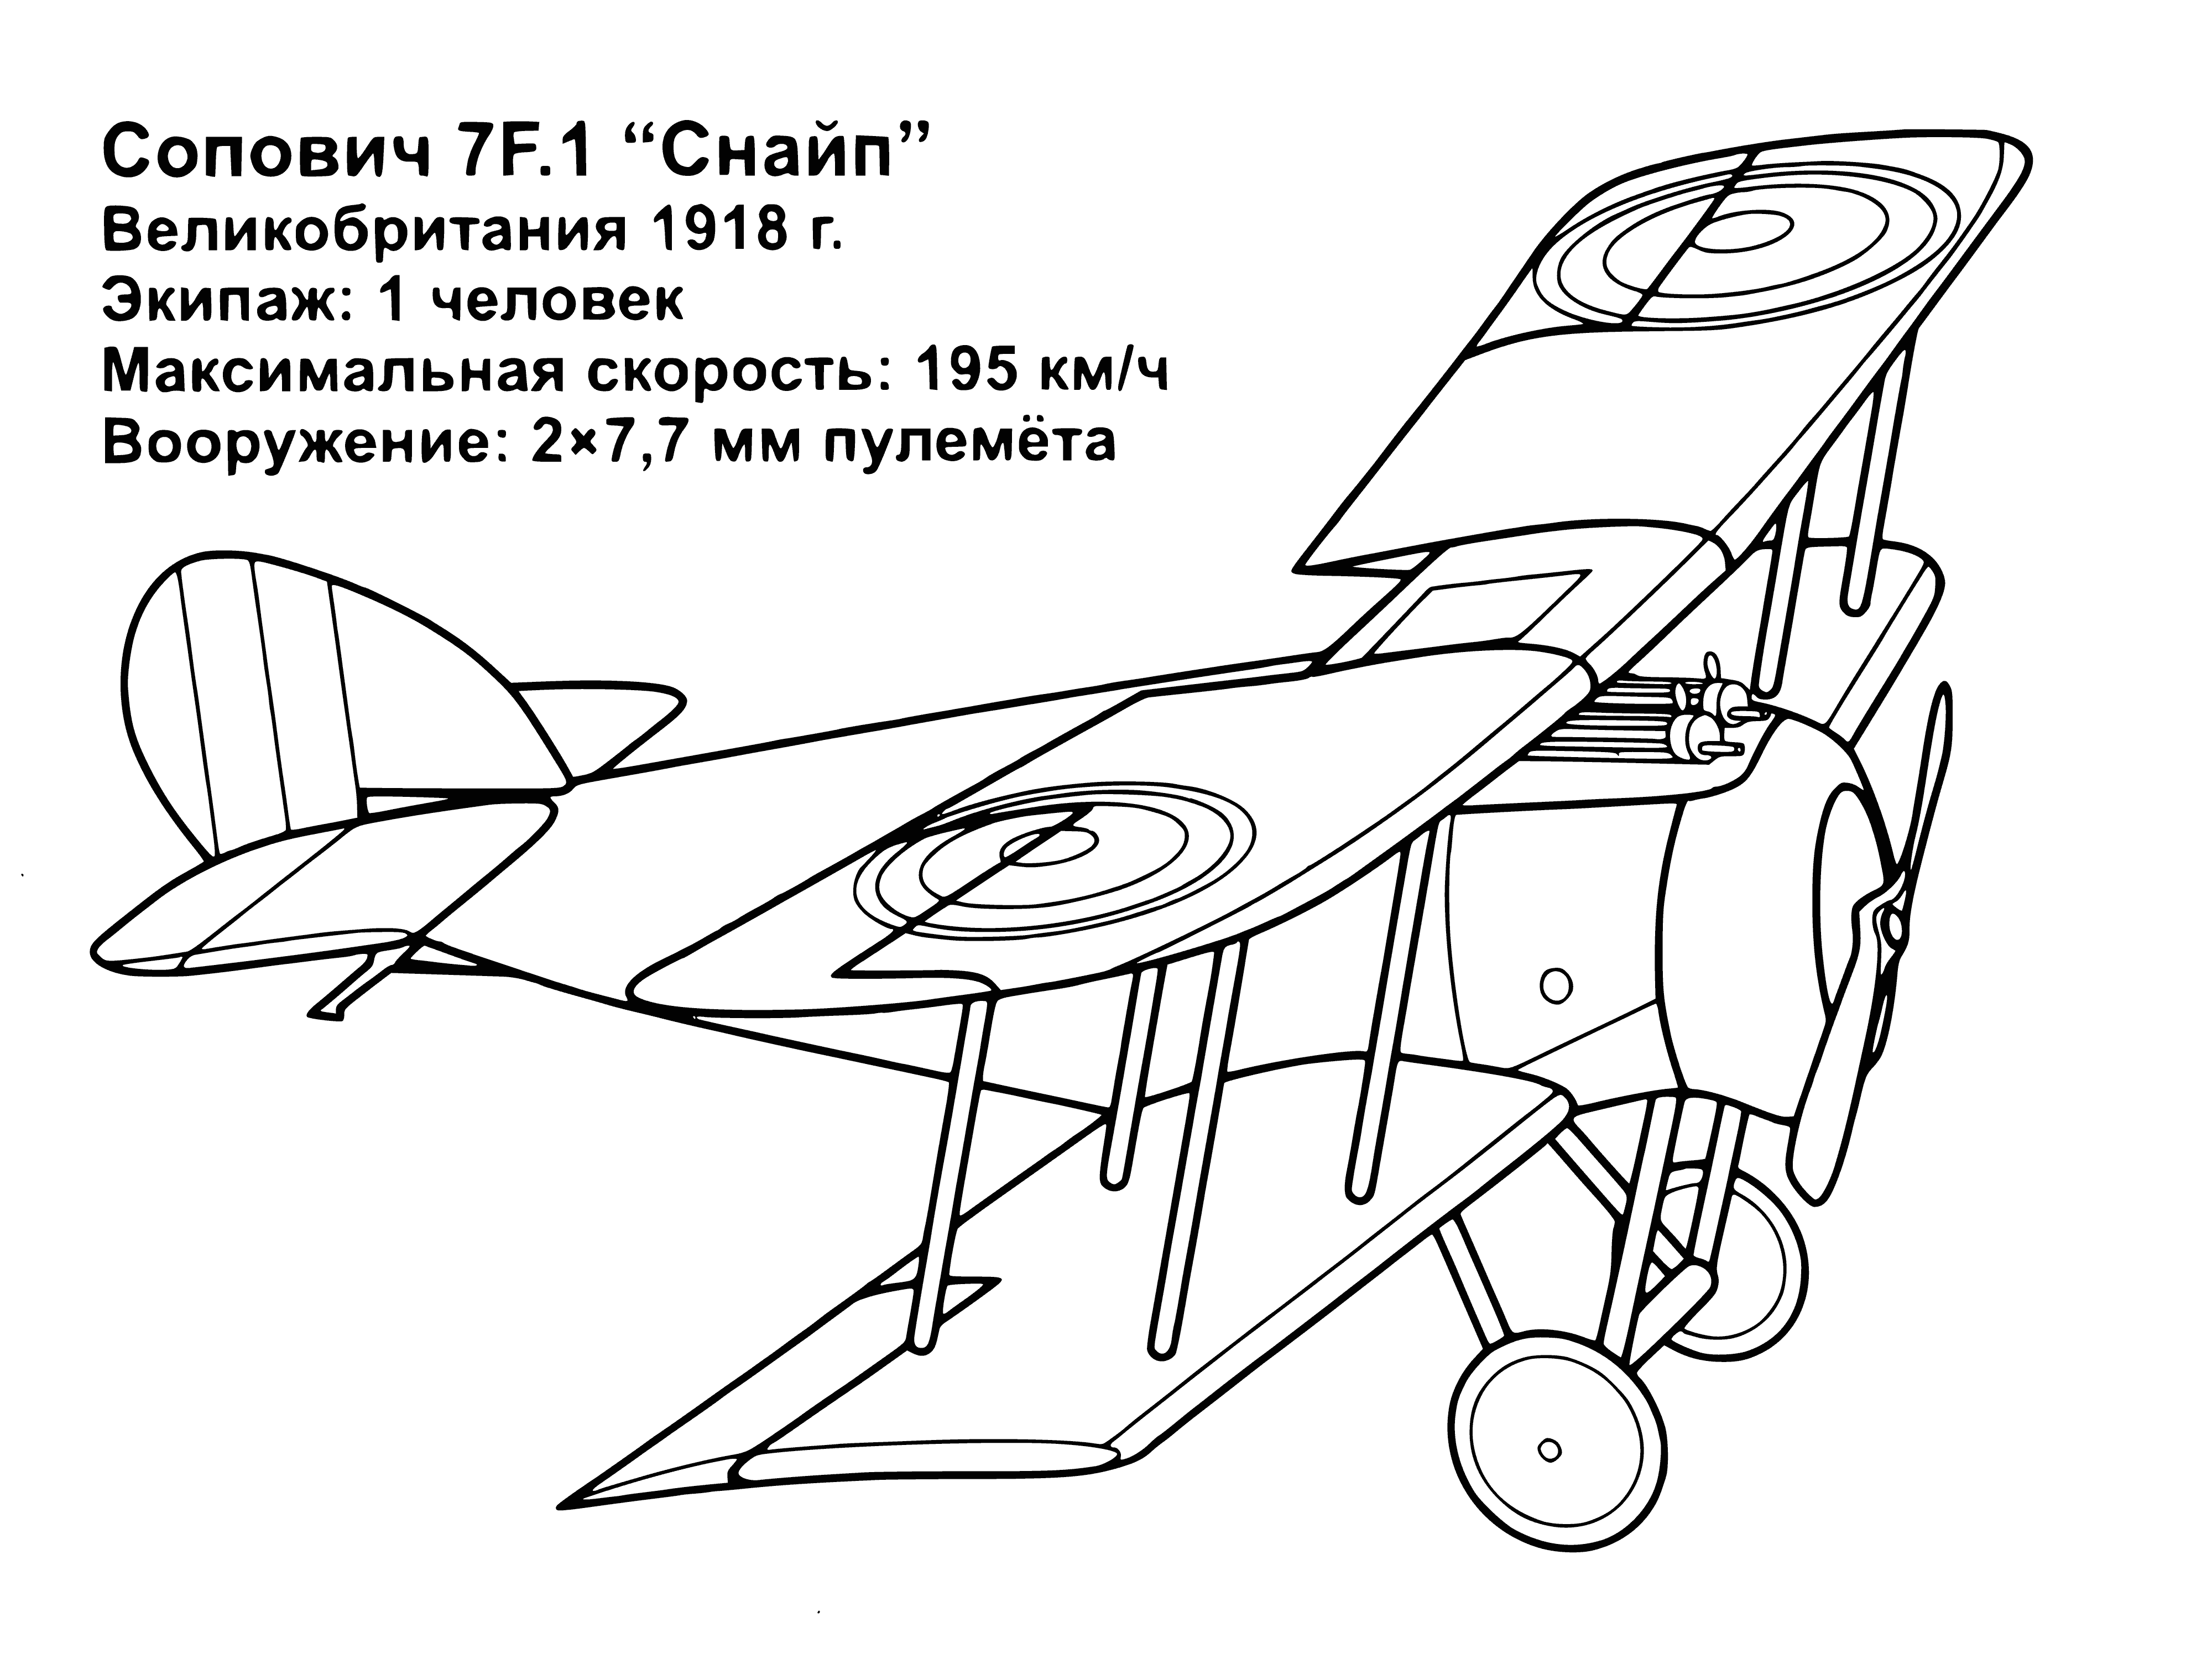 1918 English plane coloring page